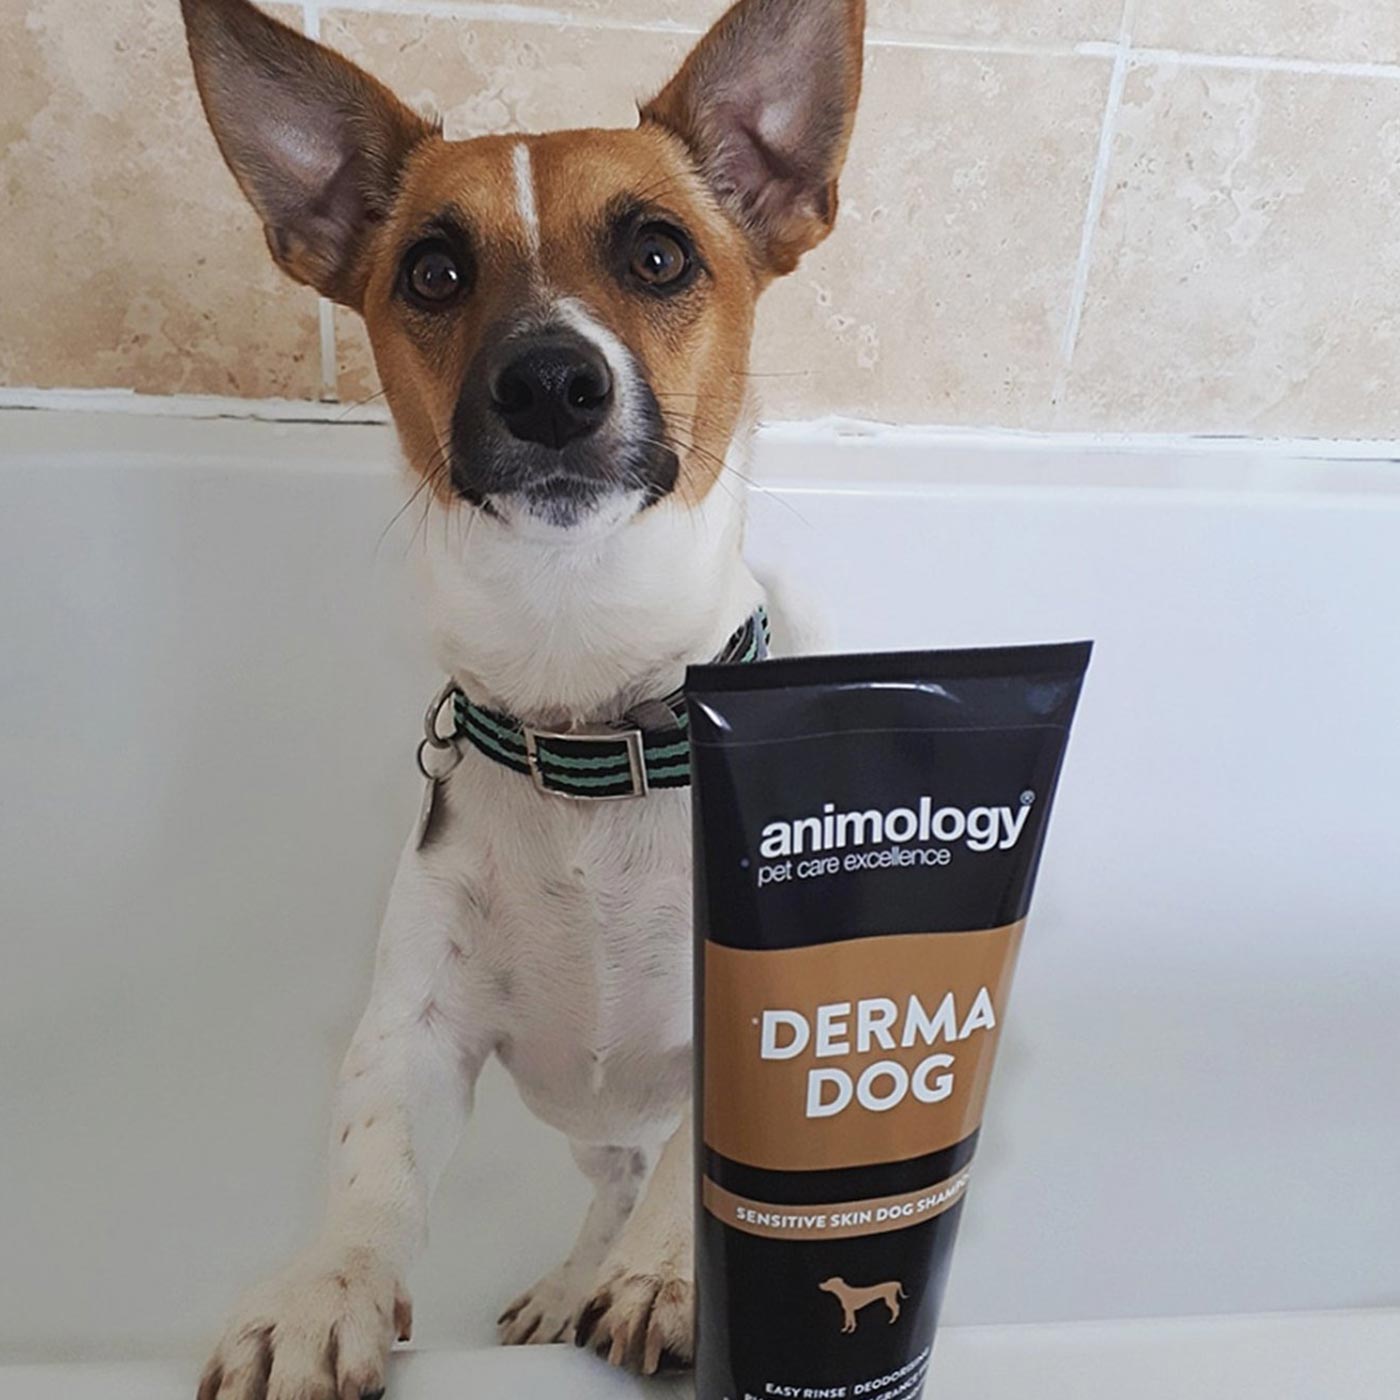 Animology Derma Dog Shampoo